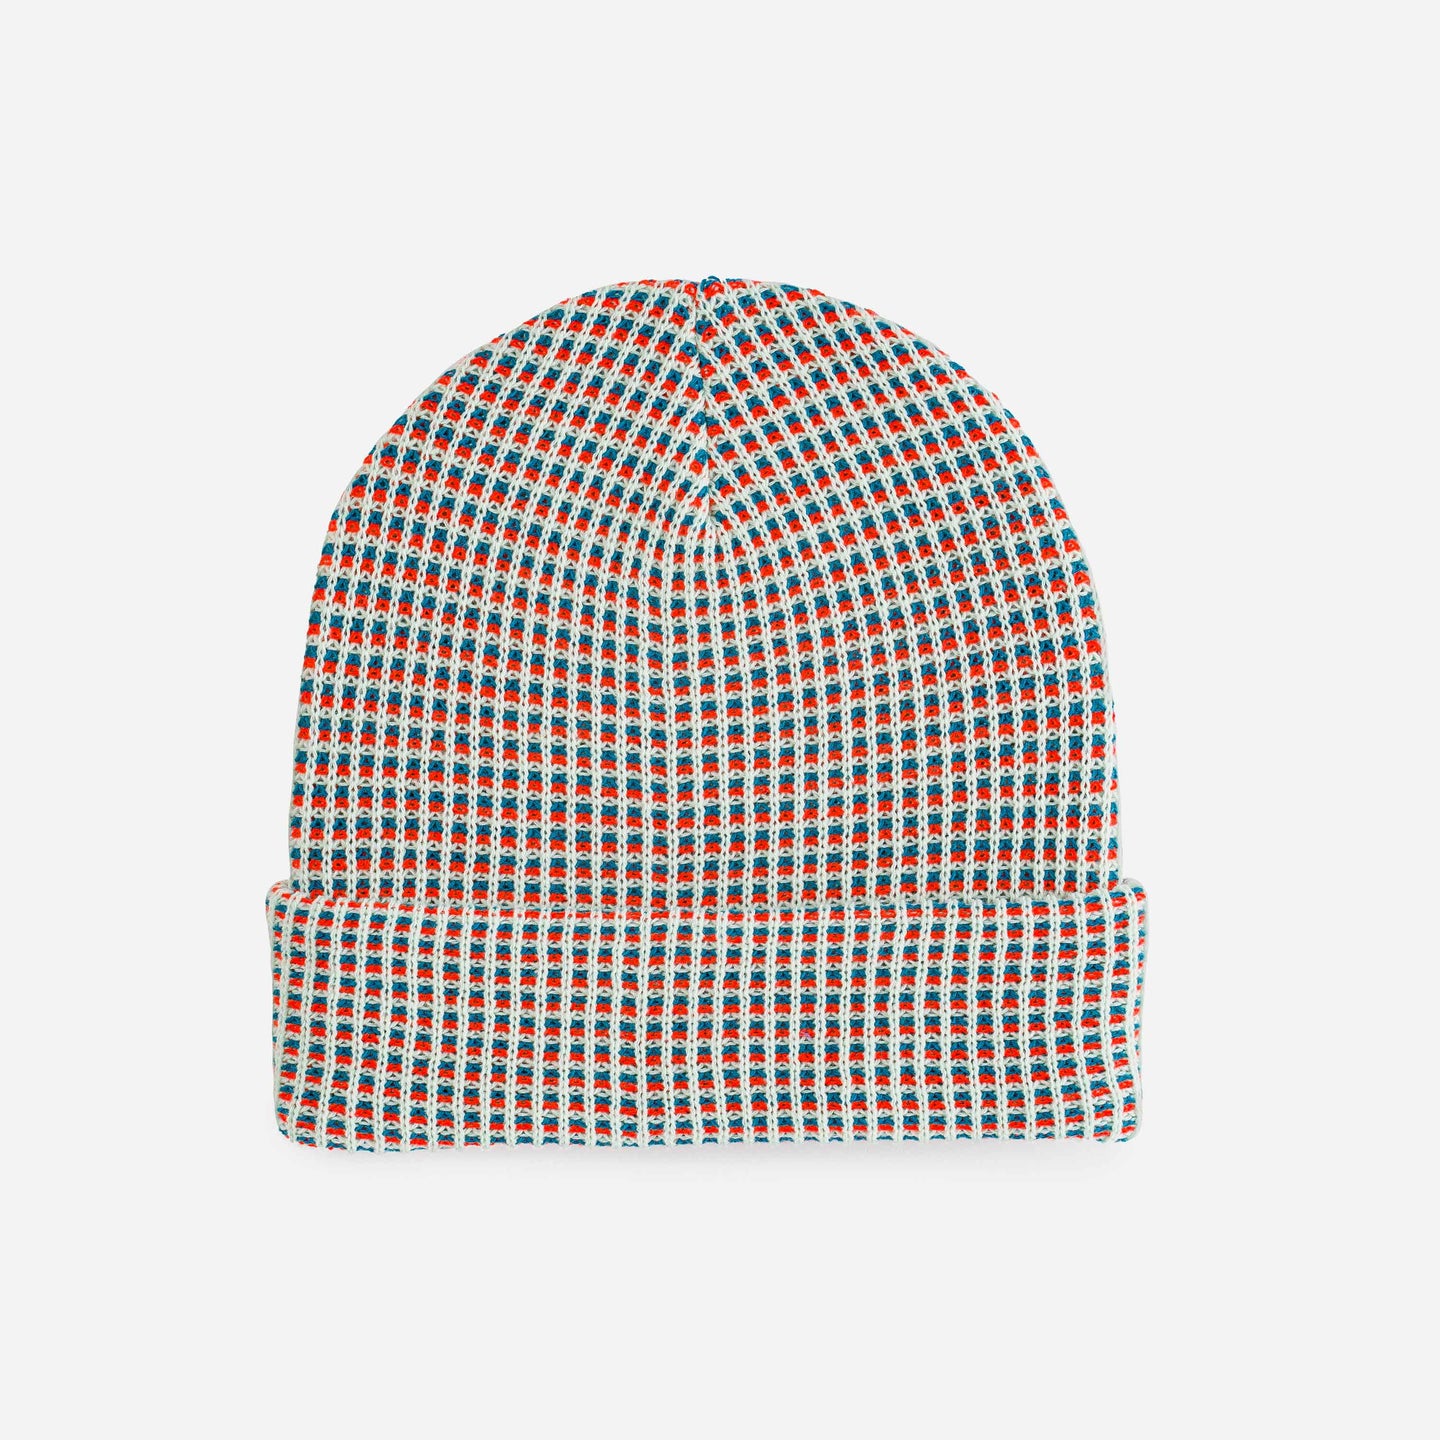 Grid Simple Rib Hat knitted cap